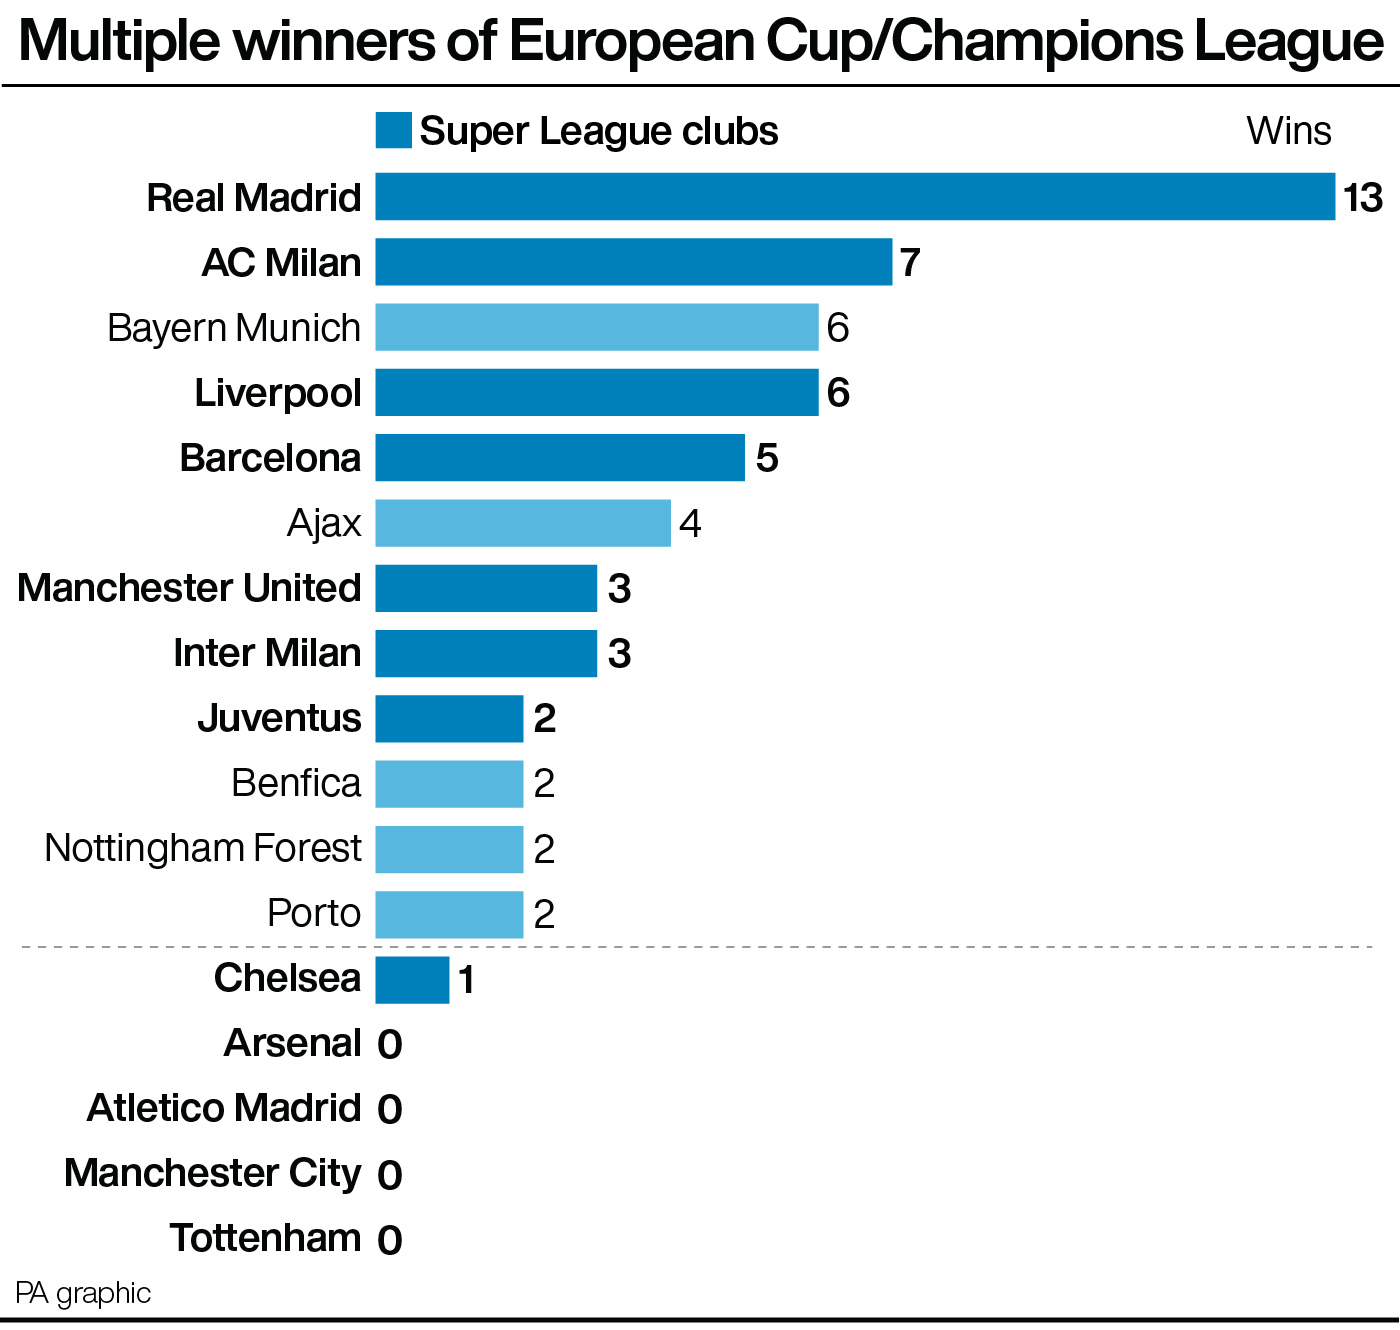 Multiple winners of European Cup/Champions League plus Super League members